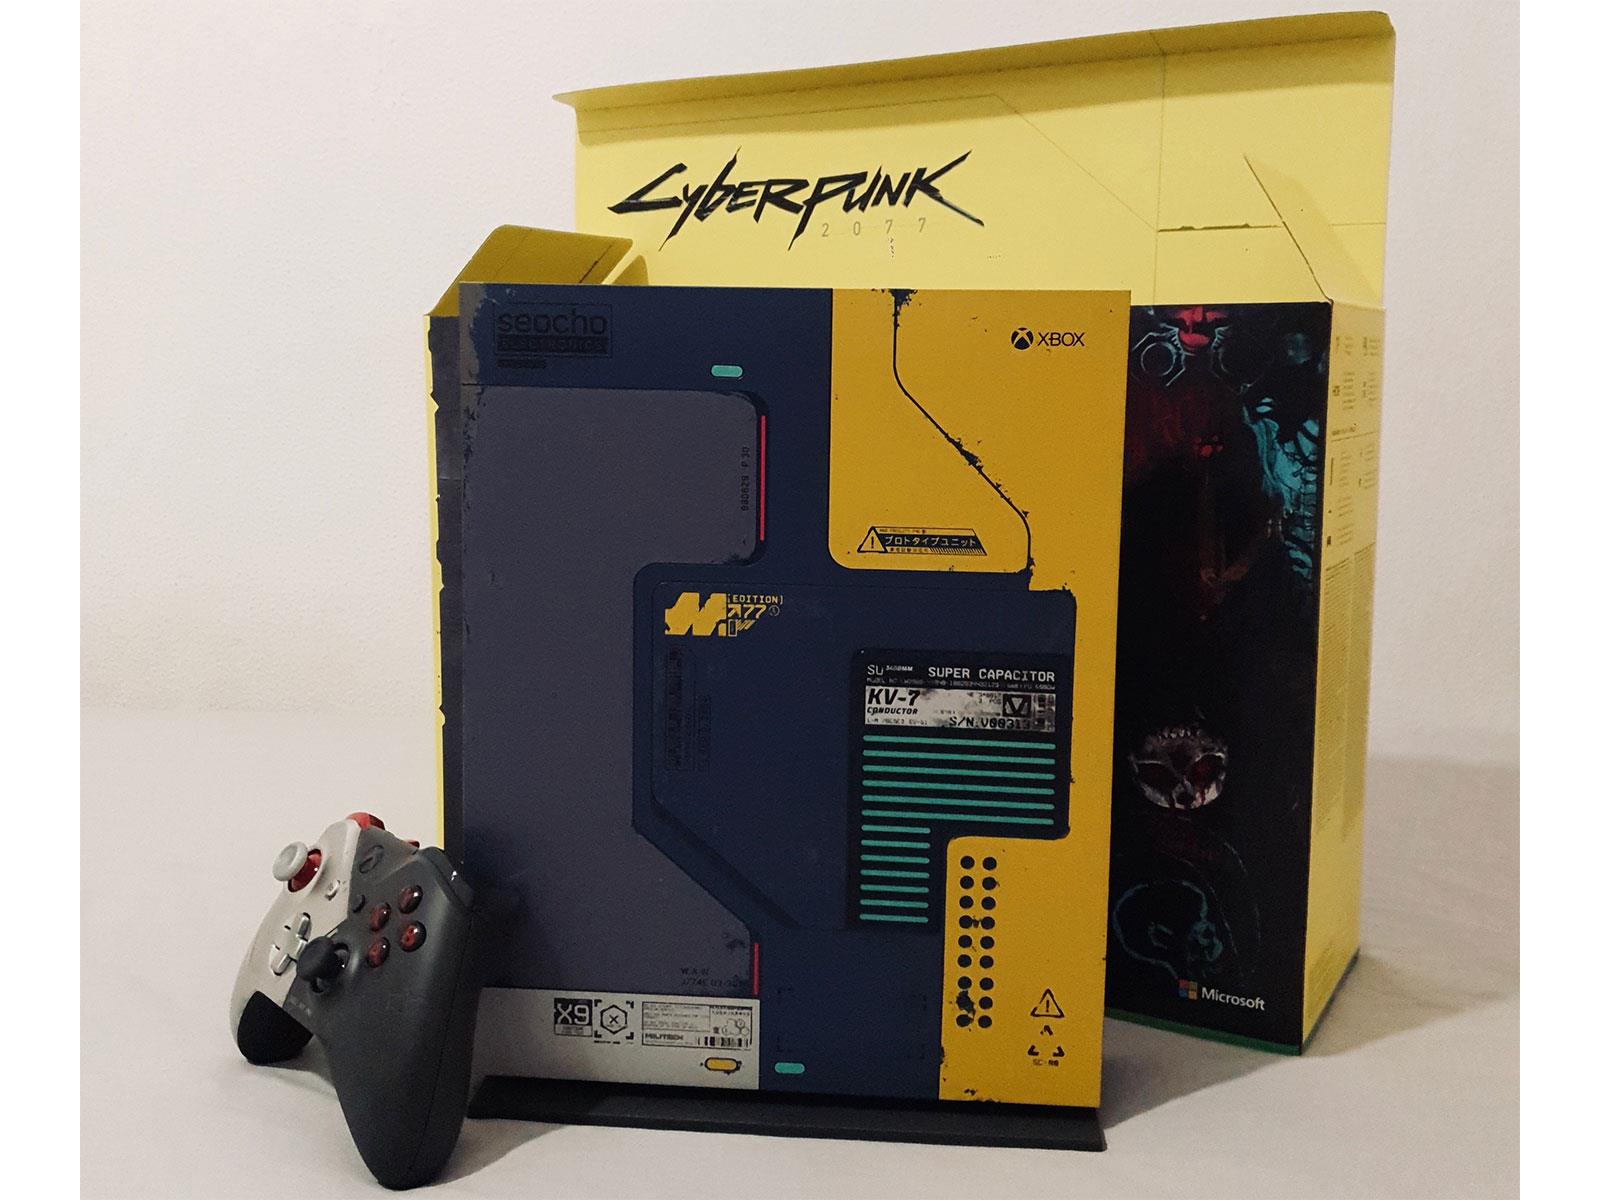 cyberpunk 2077 xbox one console pre order